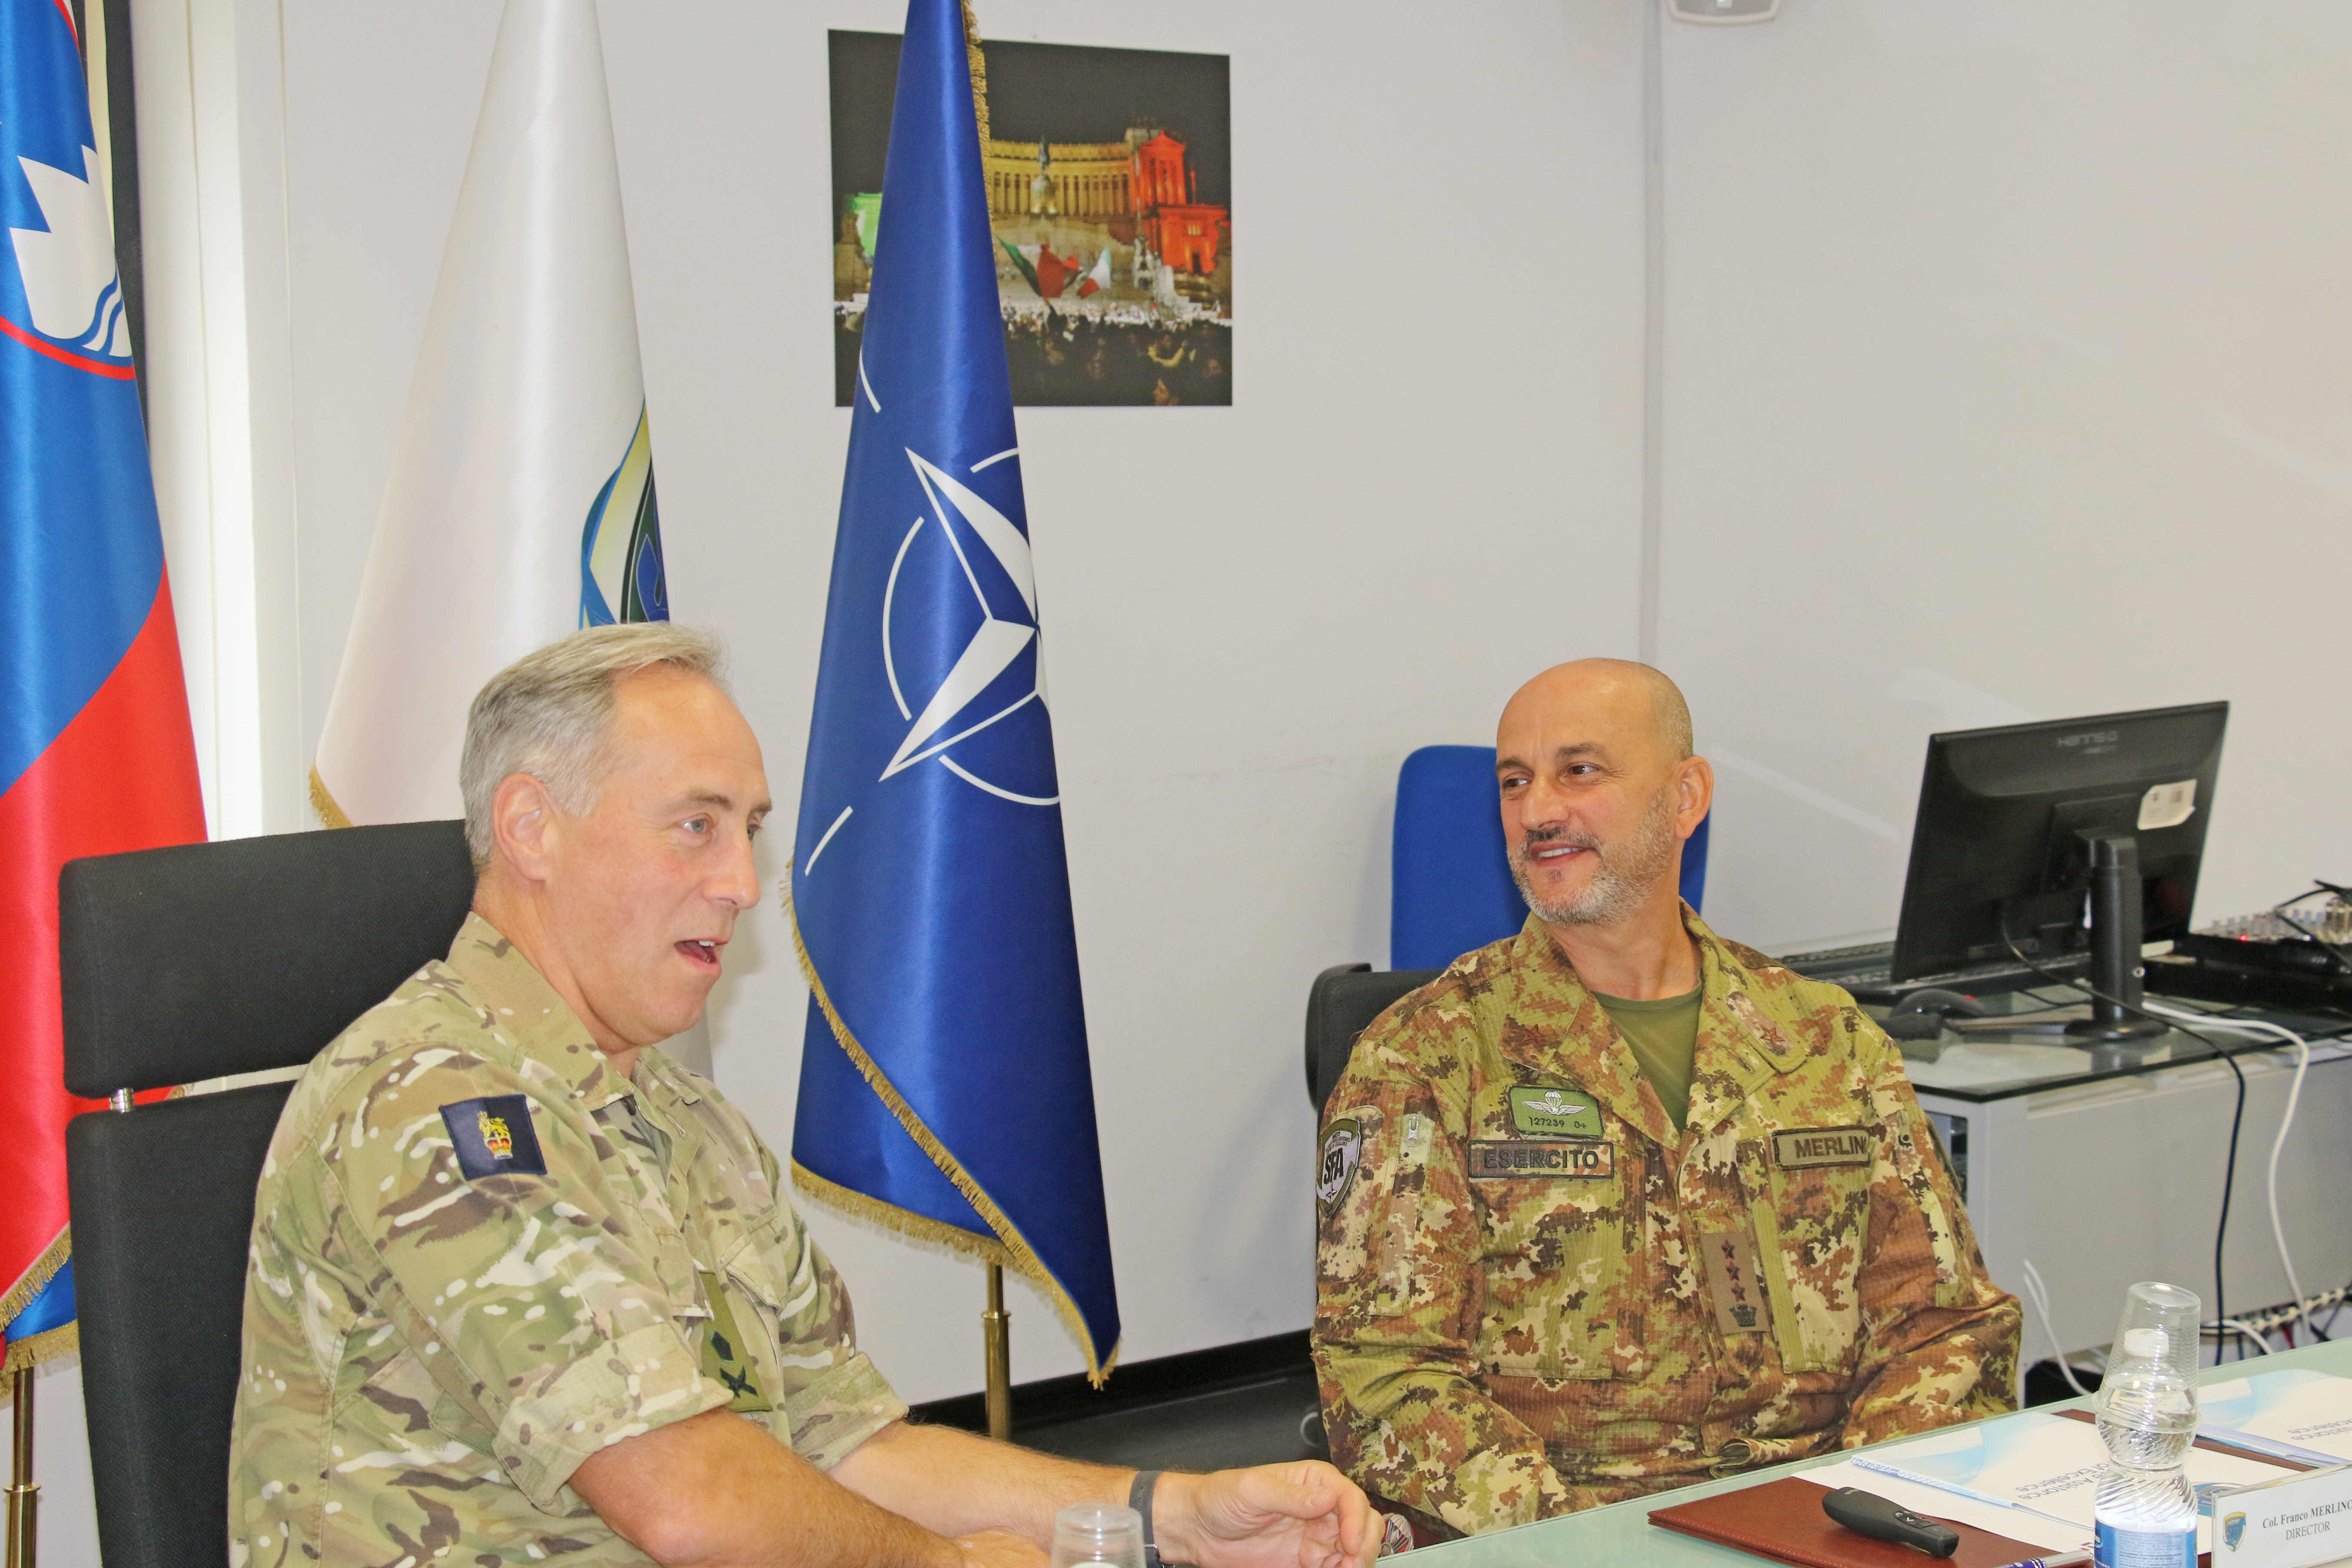 Lieutenant General Tim Radford, the future DSACEUR, paid a visit to the NATO SFA COE